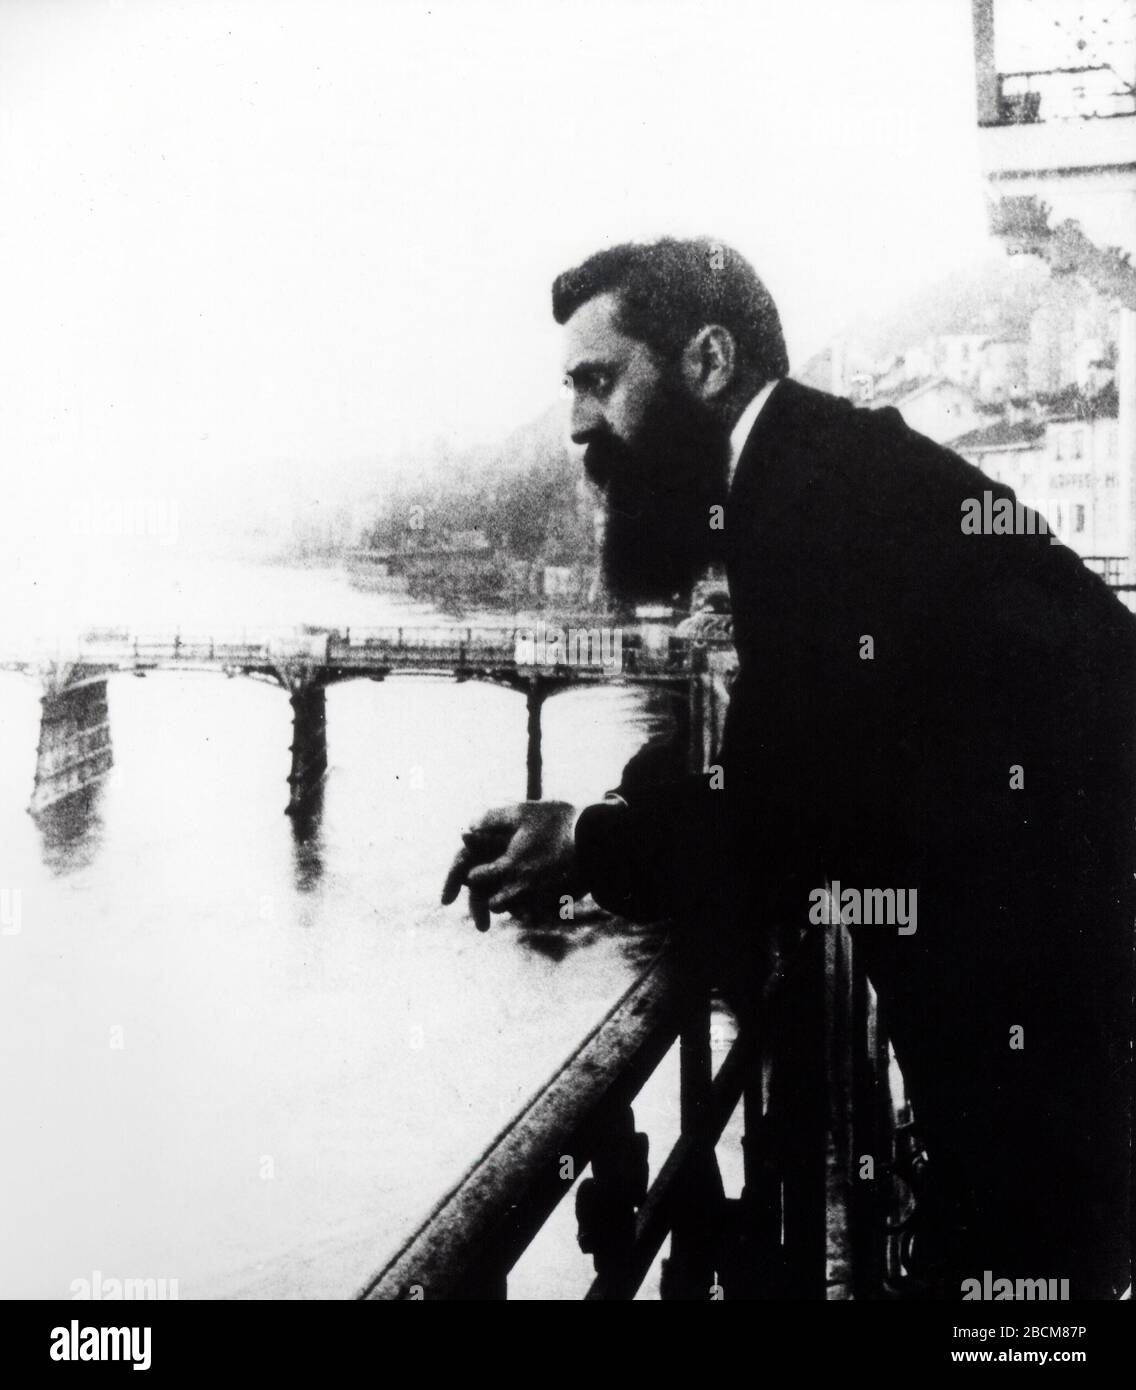 English Theodor Herzl On The Balcony Of The Three Kings Hotel In Basel In 18 During The First Zionist Congress E I I I I U E E N U U U U U I U C U I C I U U O O U C 18